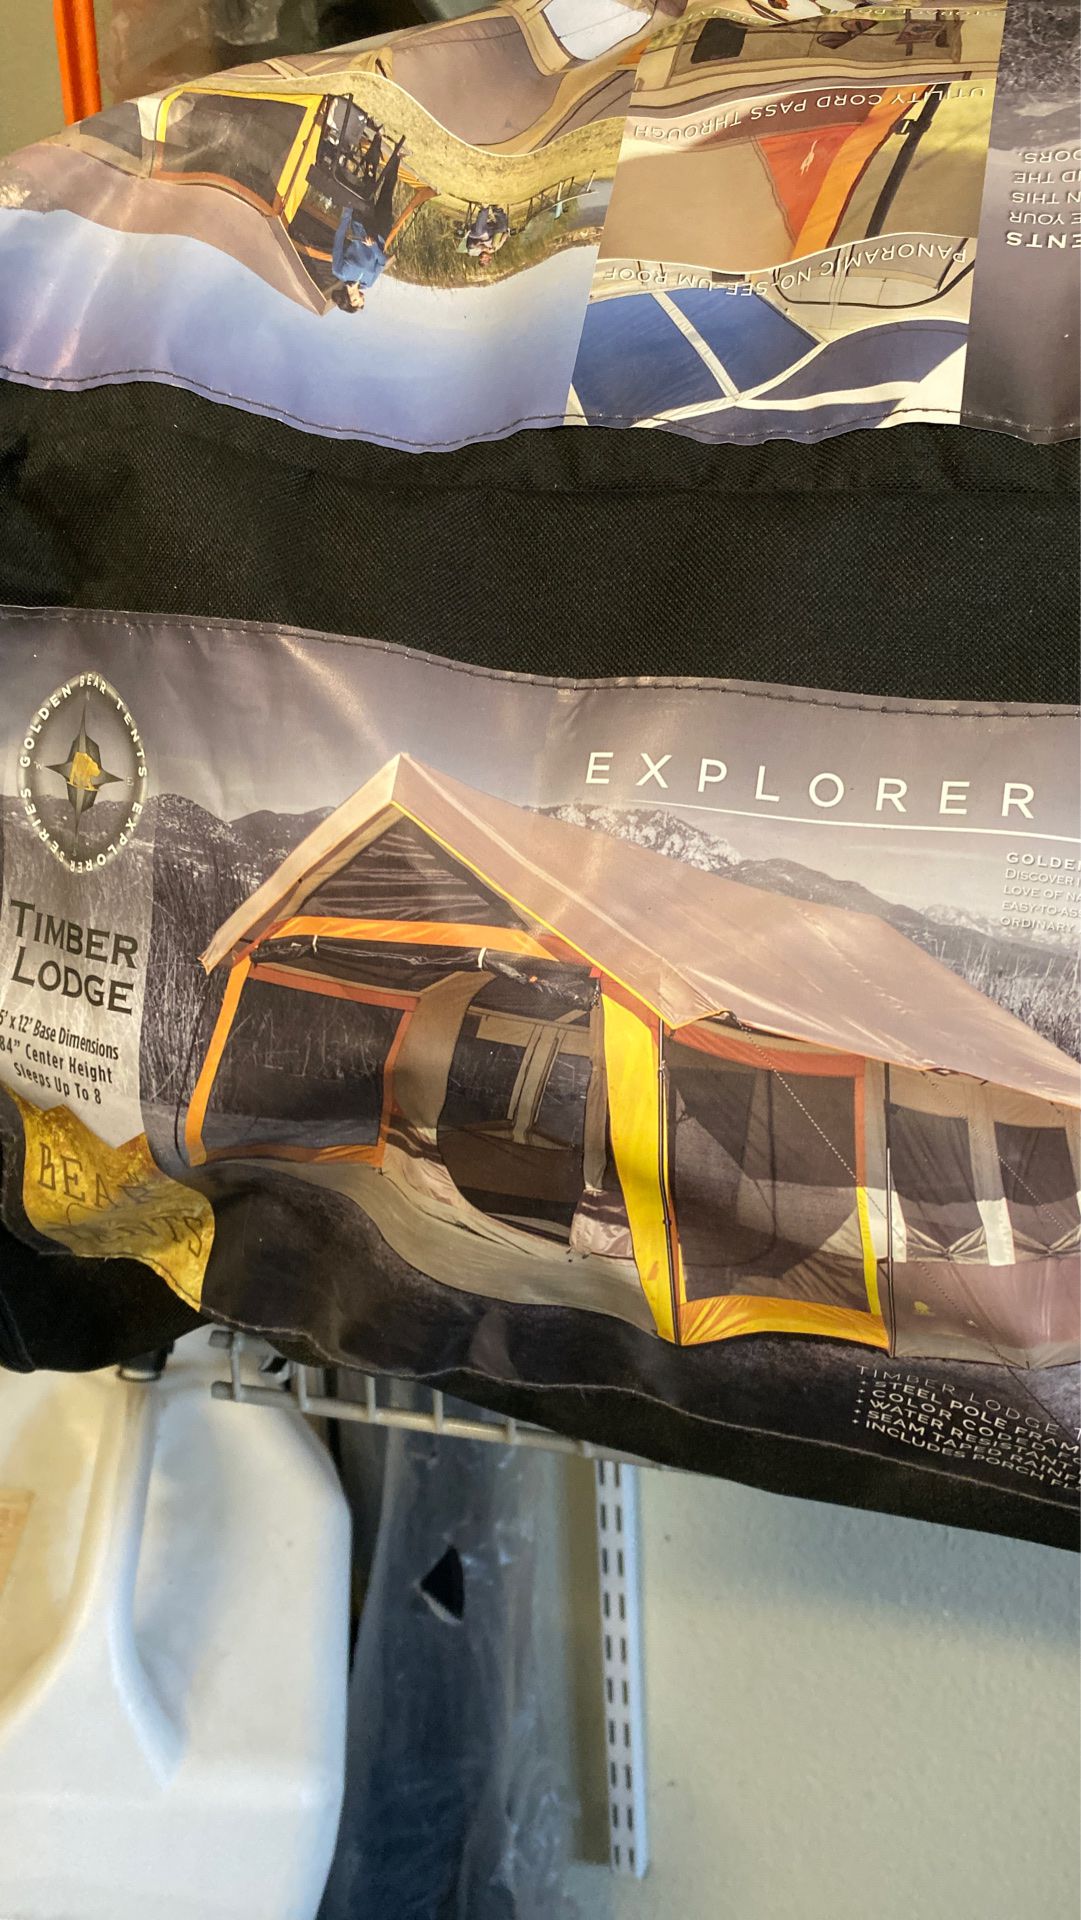 Timber Lodge Camping Tent sleeps 8